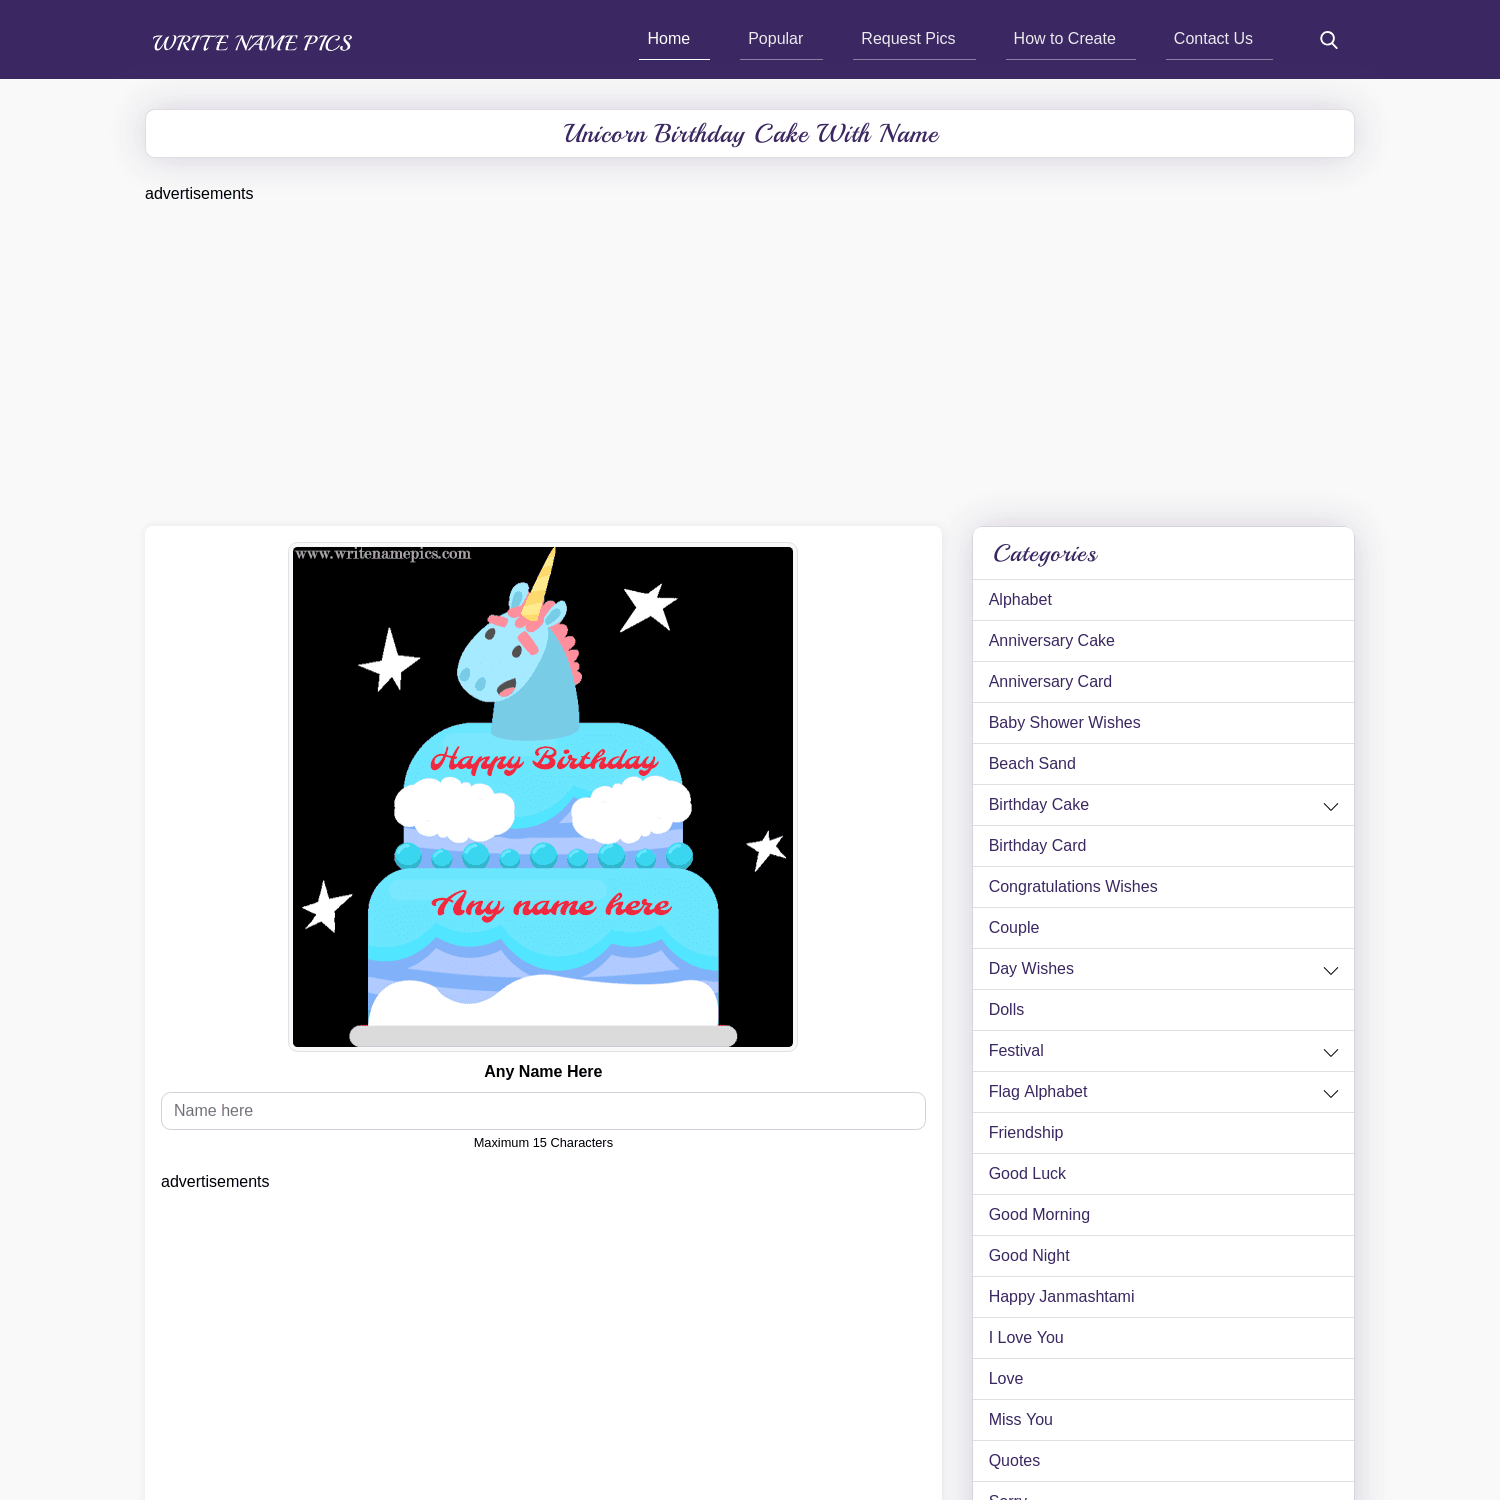 unicorn birthday cake with name